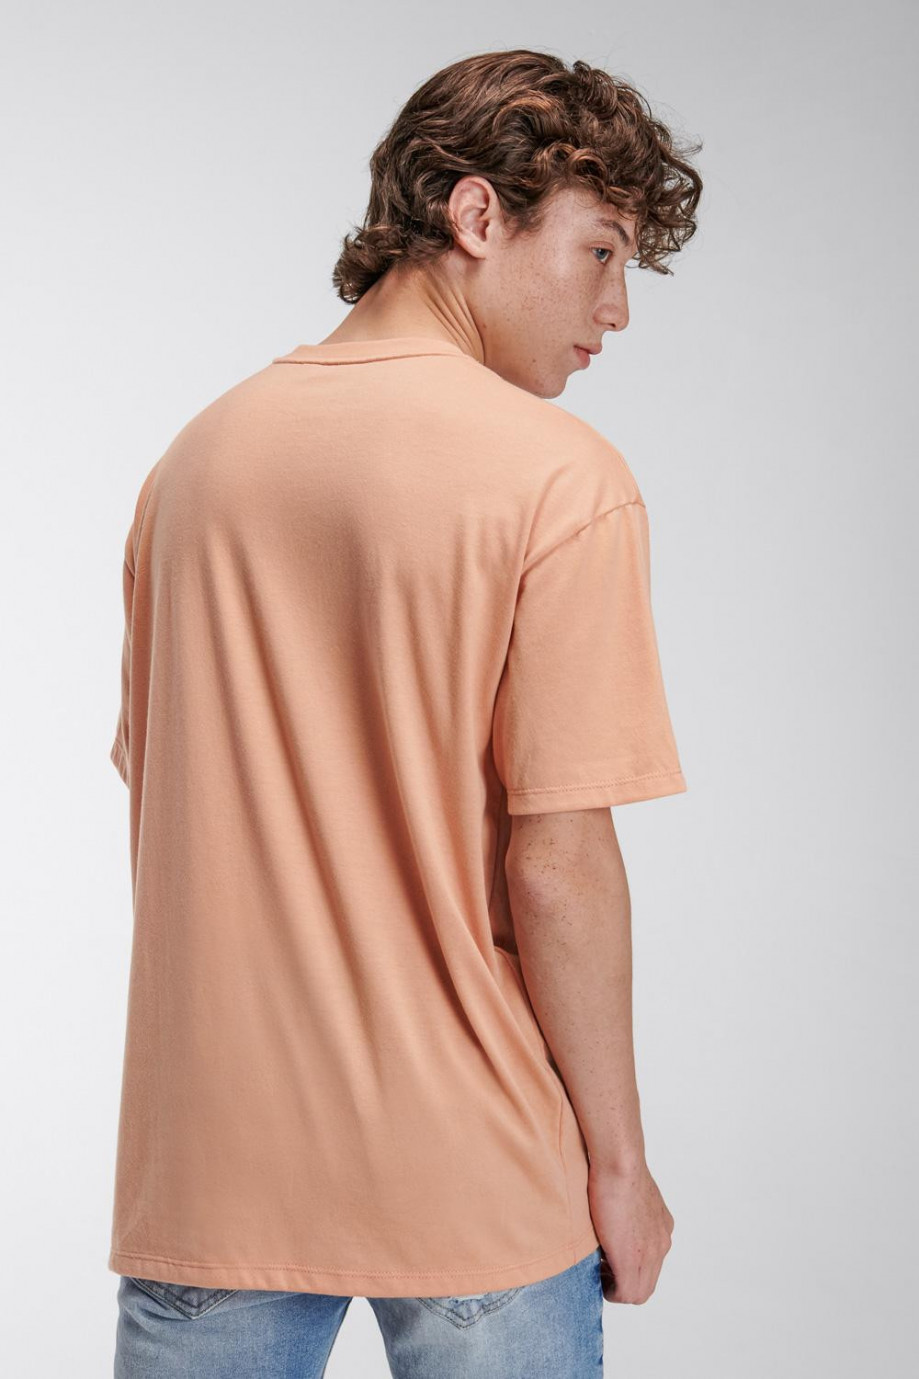 Camiseta oversize estampada, cuello redondo, manga corta